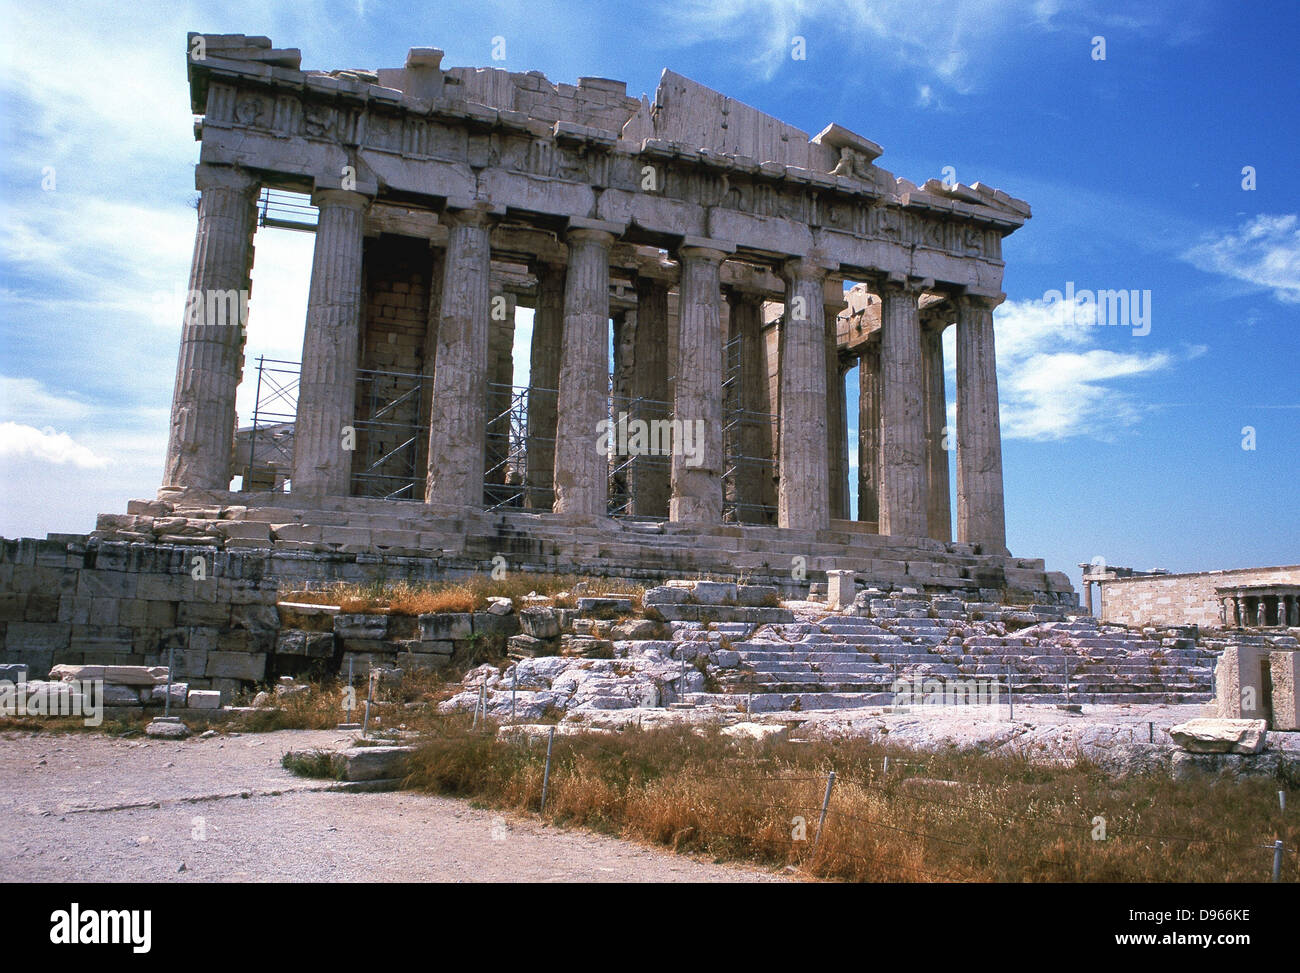 Estatua atenea acropolis fotografías e imágenes de alta resolución - Alamy